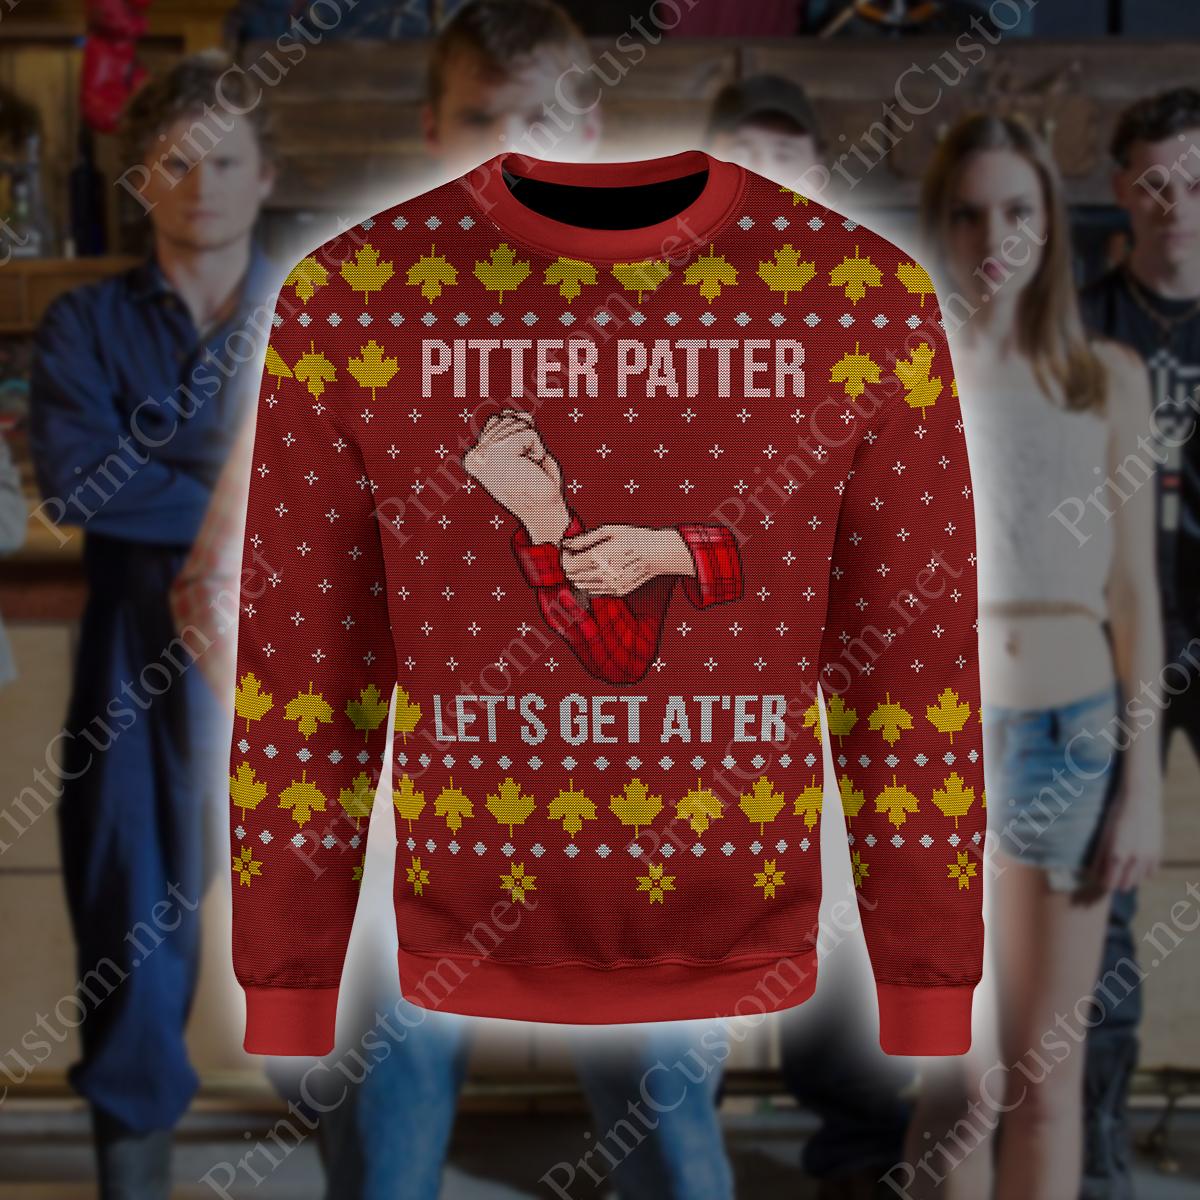 Letterkenny pitter patter let's get at'er ugly christmas sweater - 2